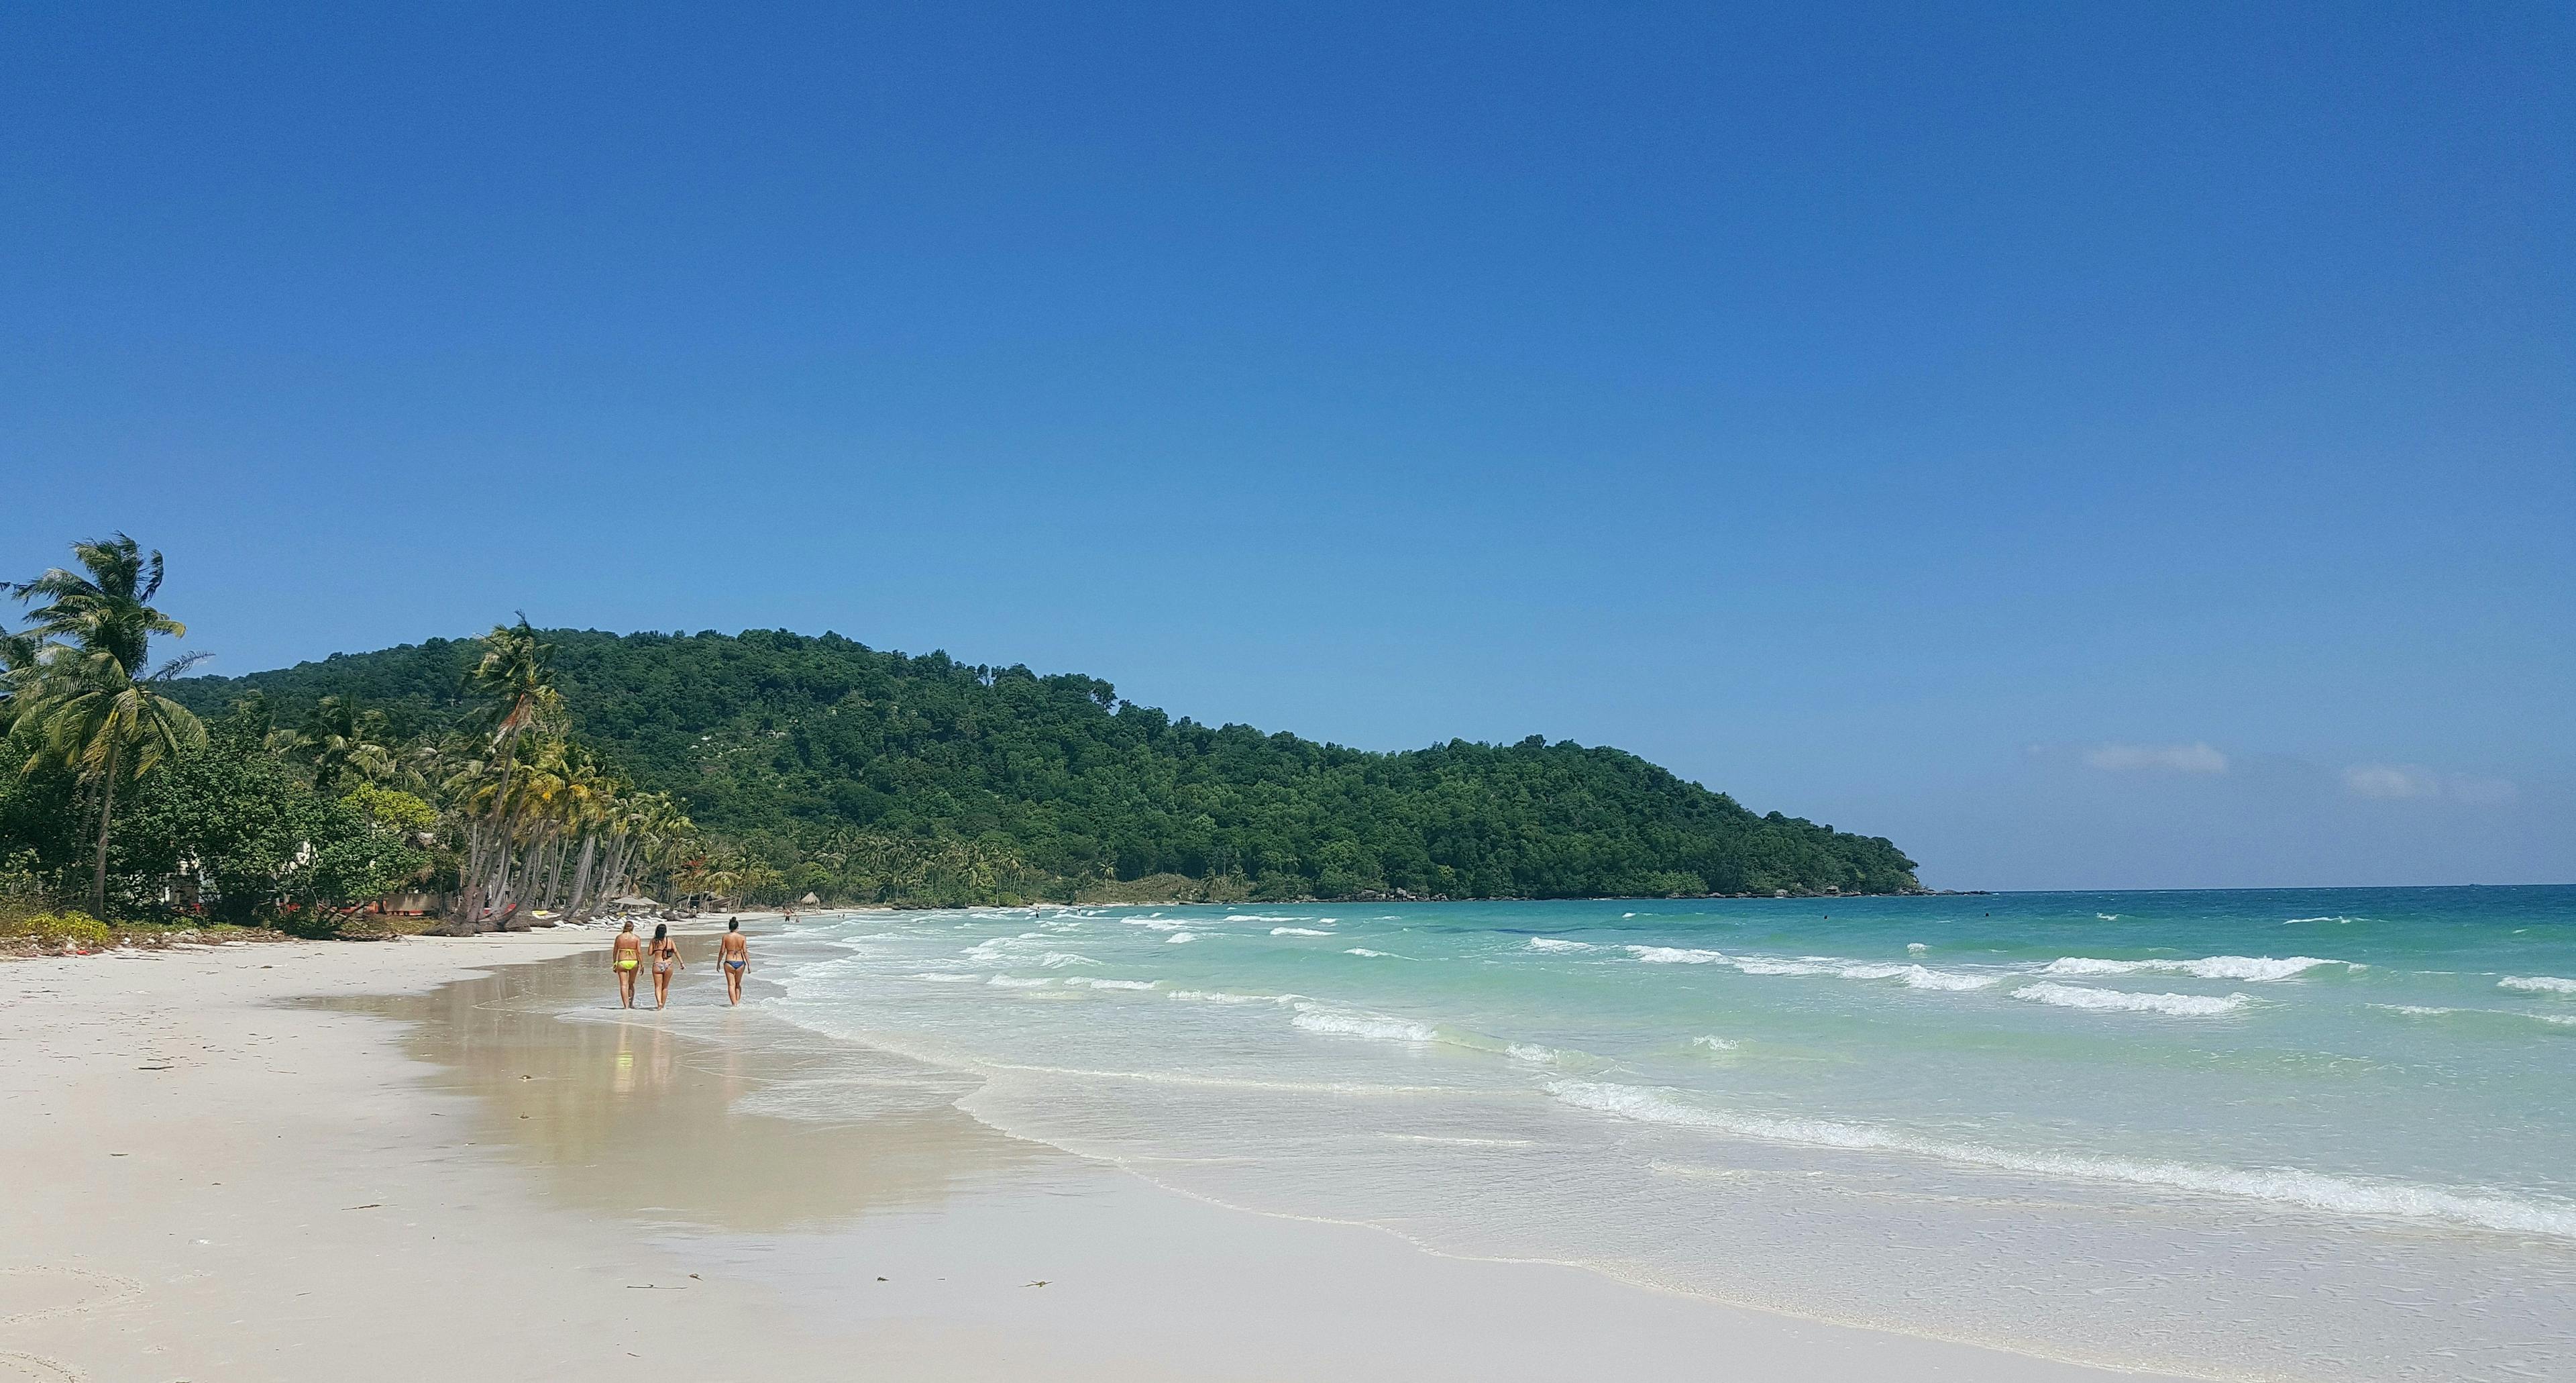 Beach on Phu Quoc island in Vietnam.